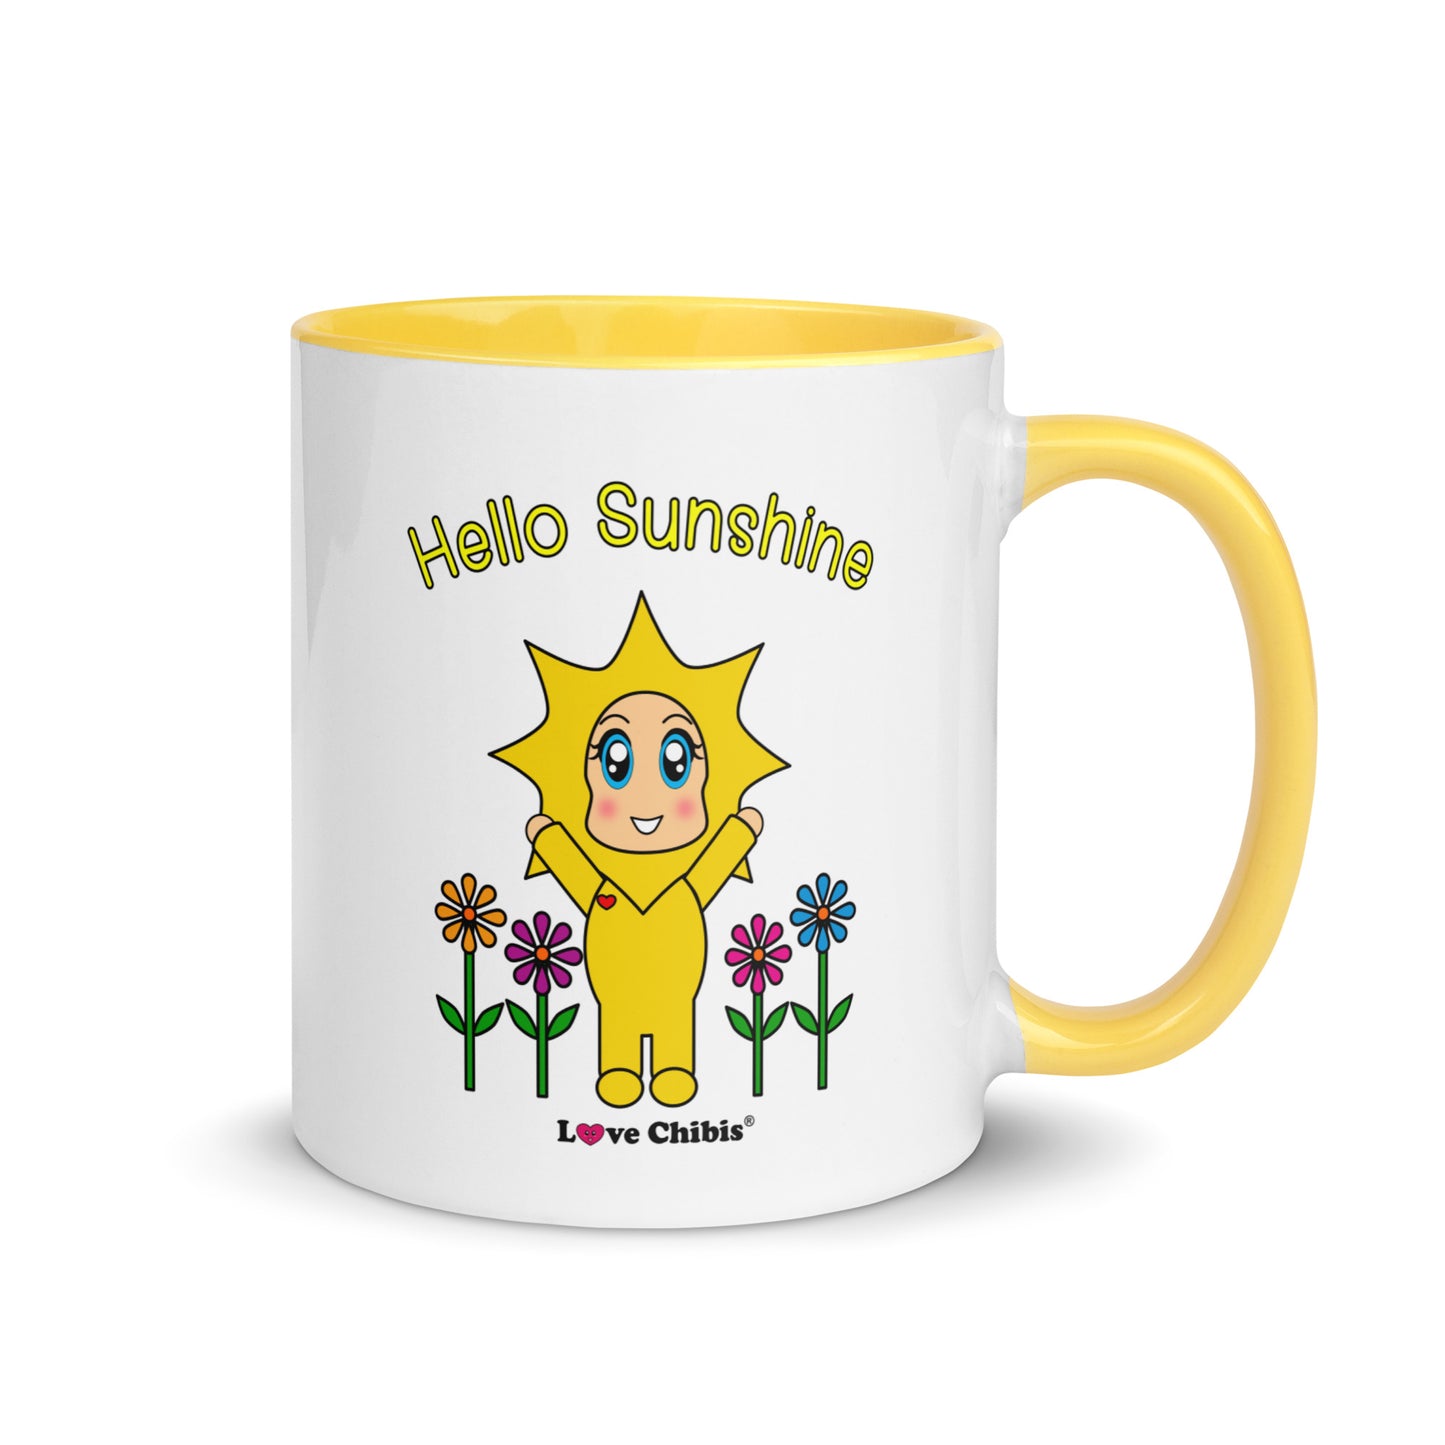 Love Chibis® Hello Sunshine Two Tone Yellow/White 11 oz Ceramic Mug